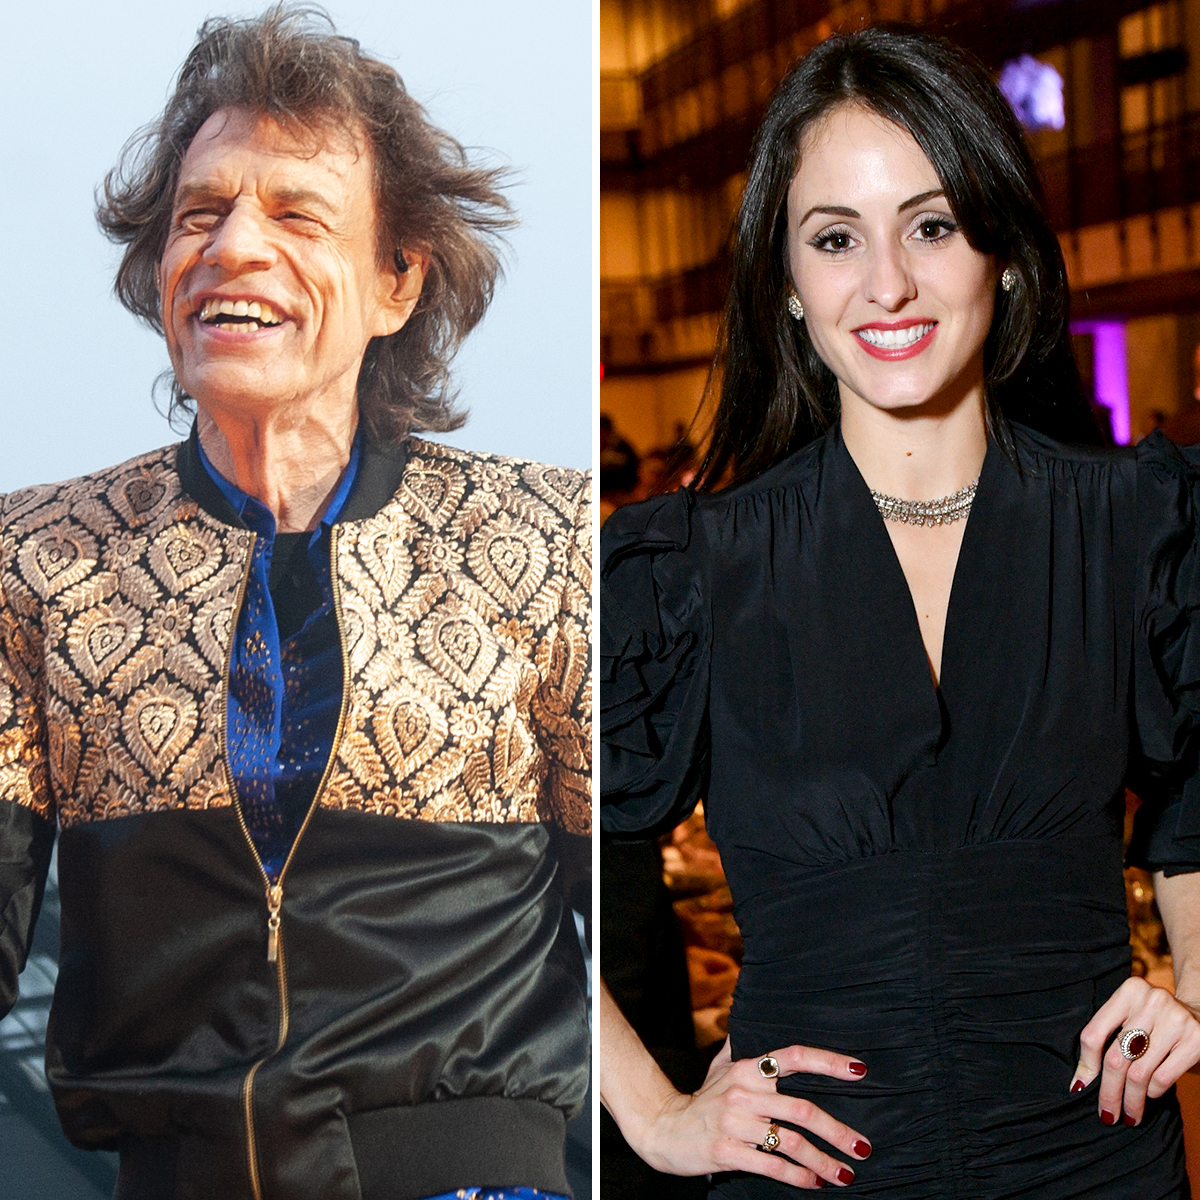 Mick Jagger 79 And Girlfriend Melanie Hamrick 35 Cele vrogue.co